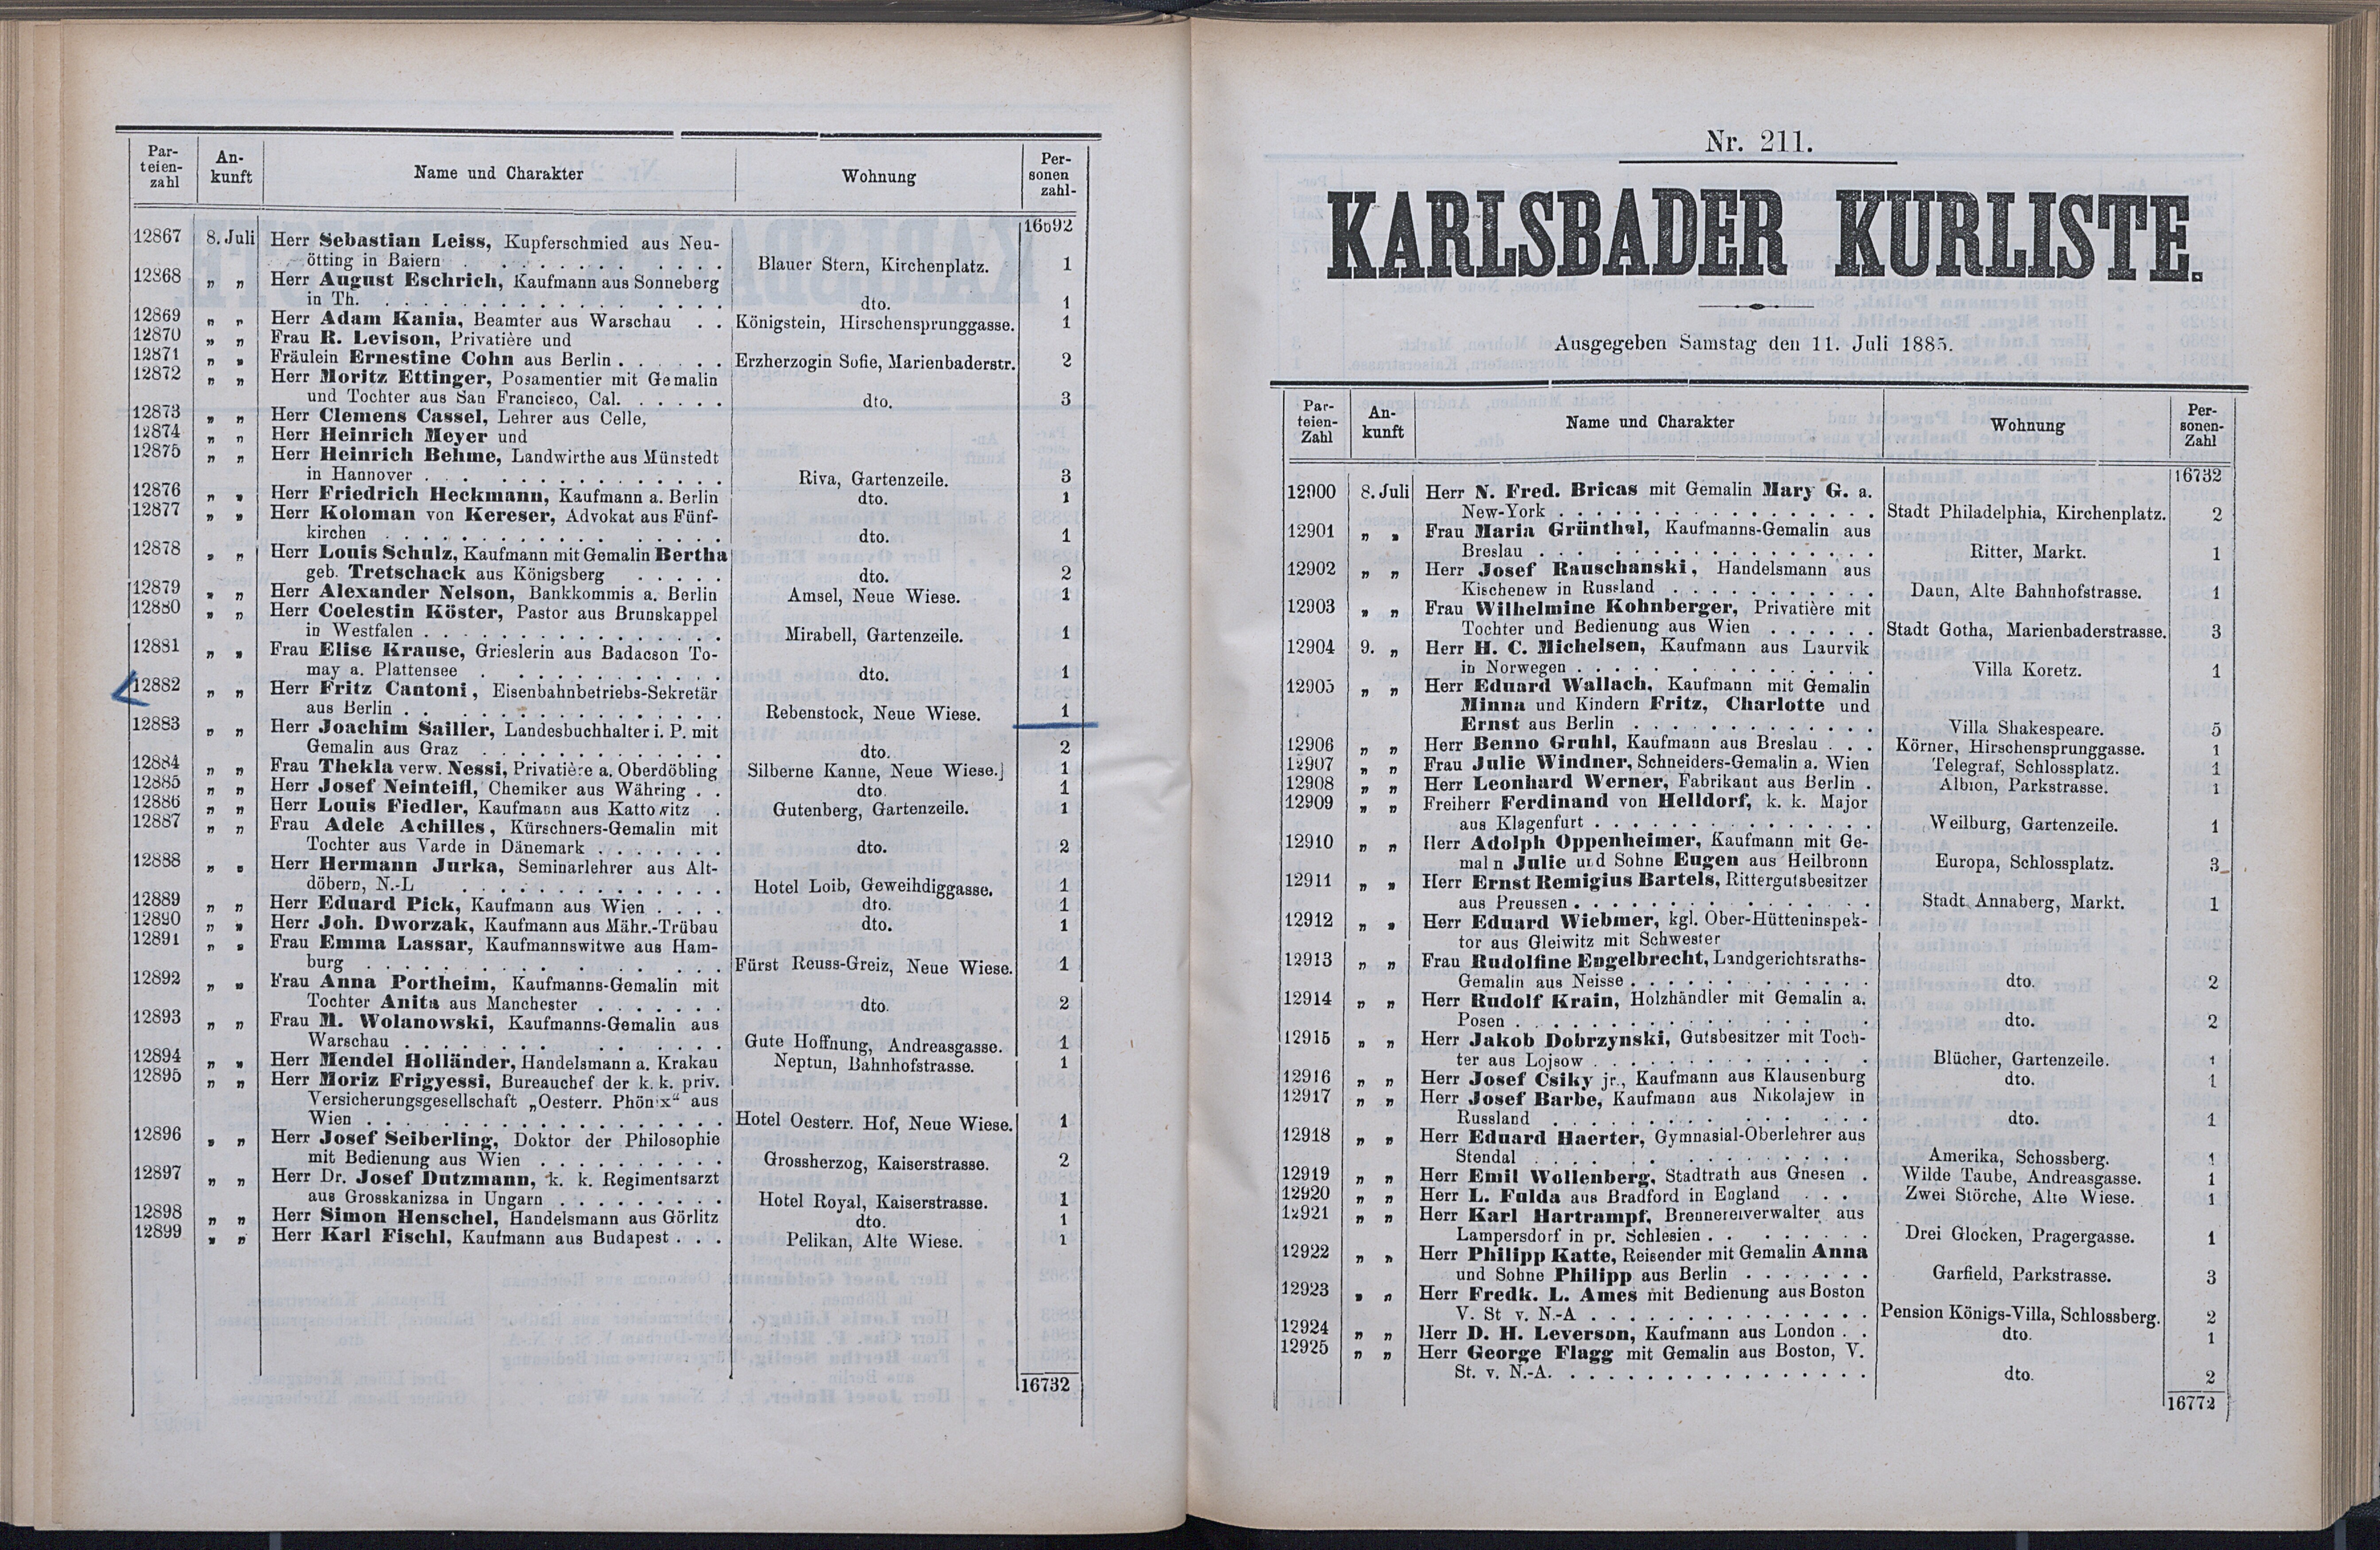 263. soap-kv_knihovna_karlsbader-kurliste-1885_2640